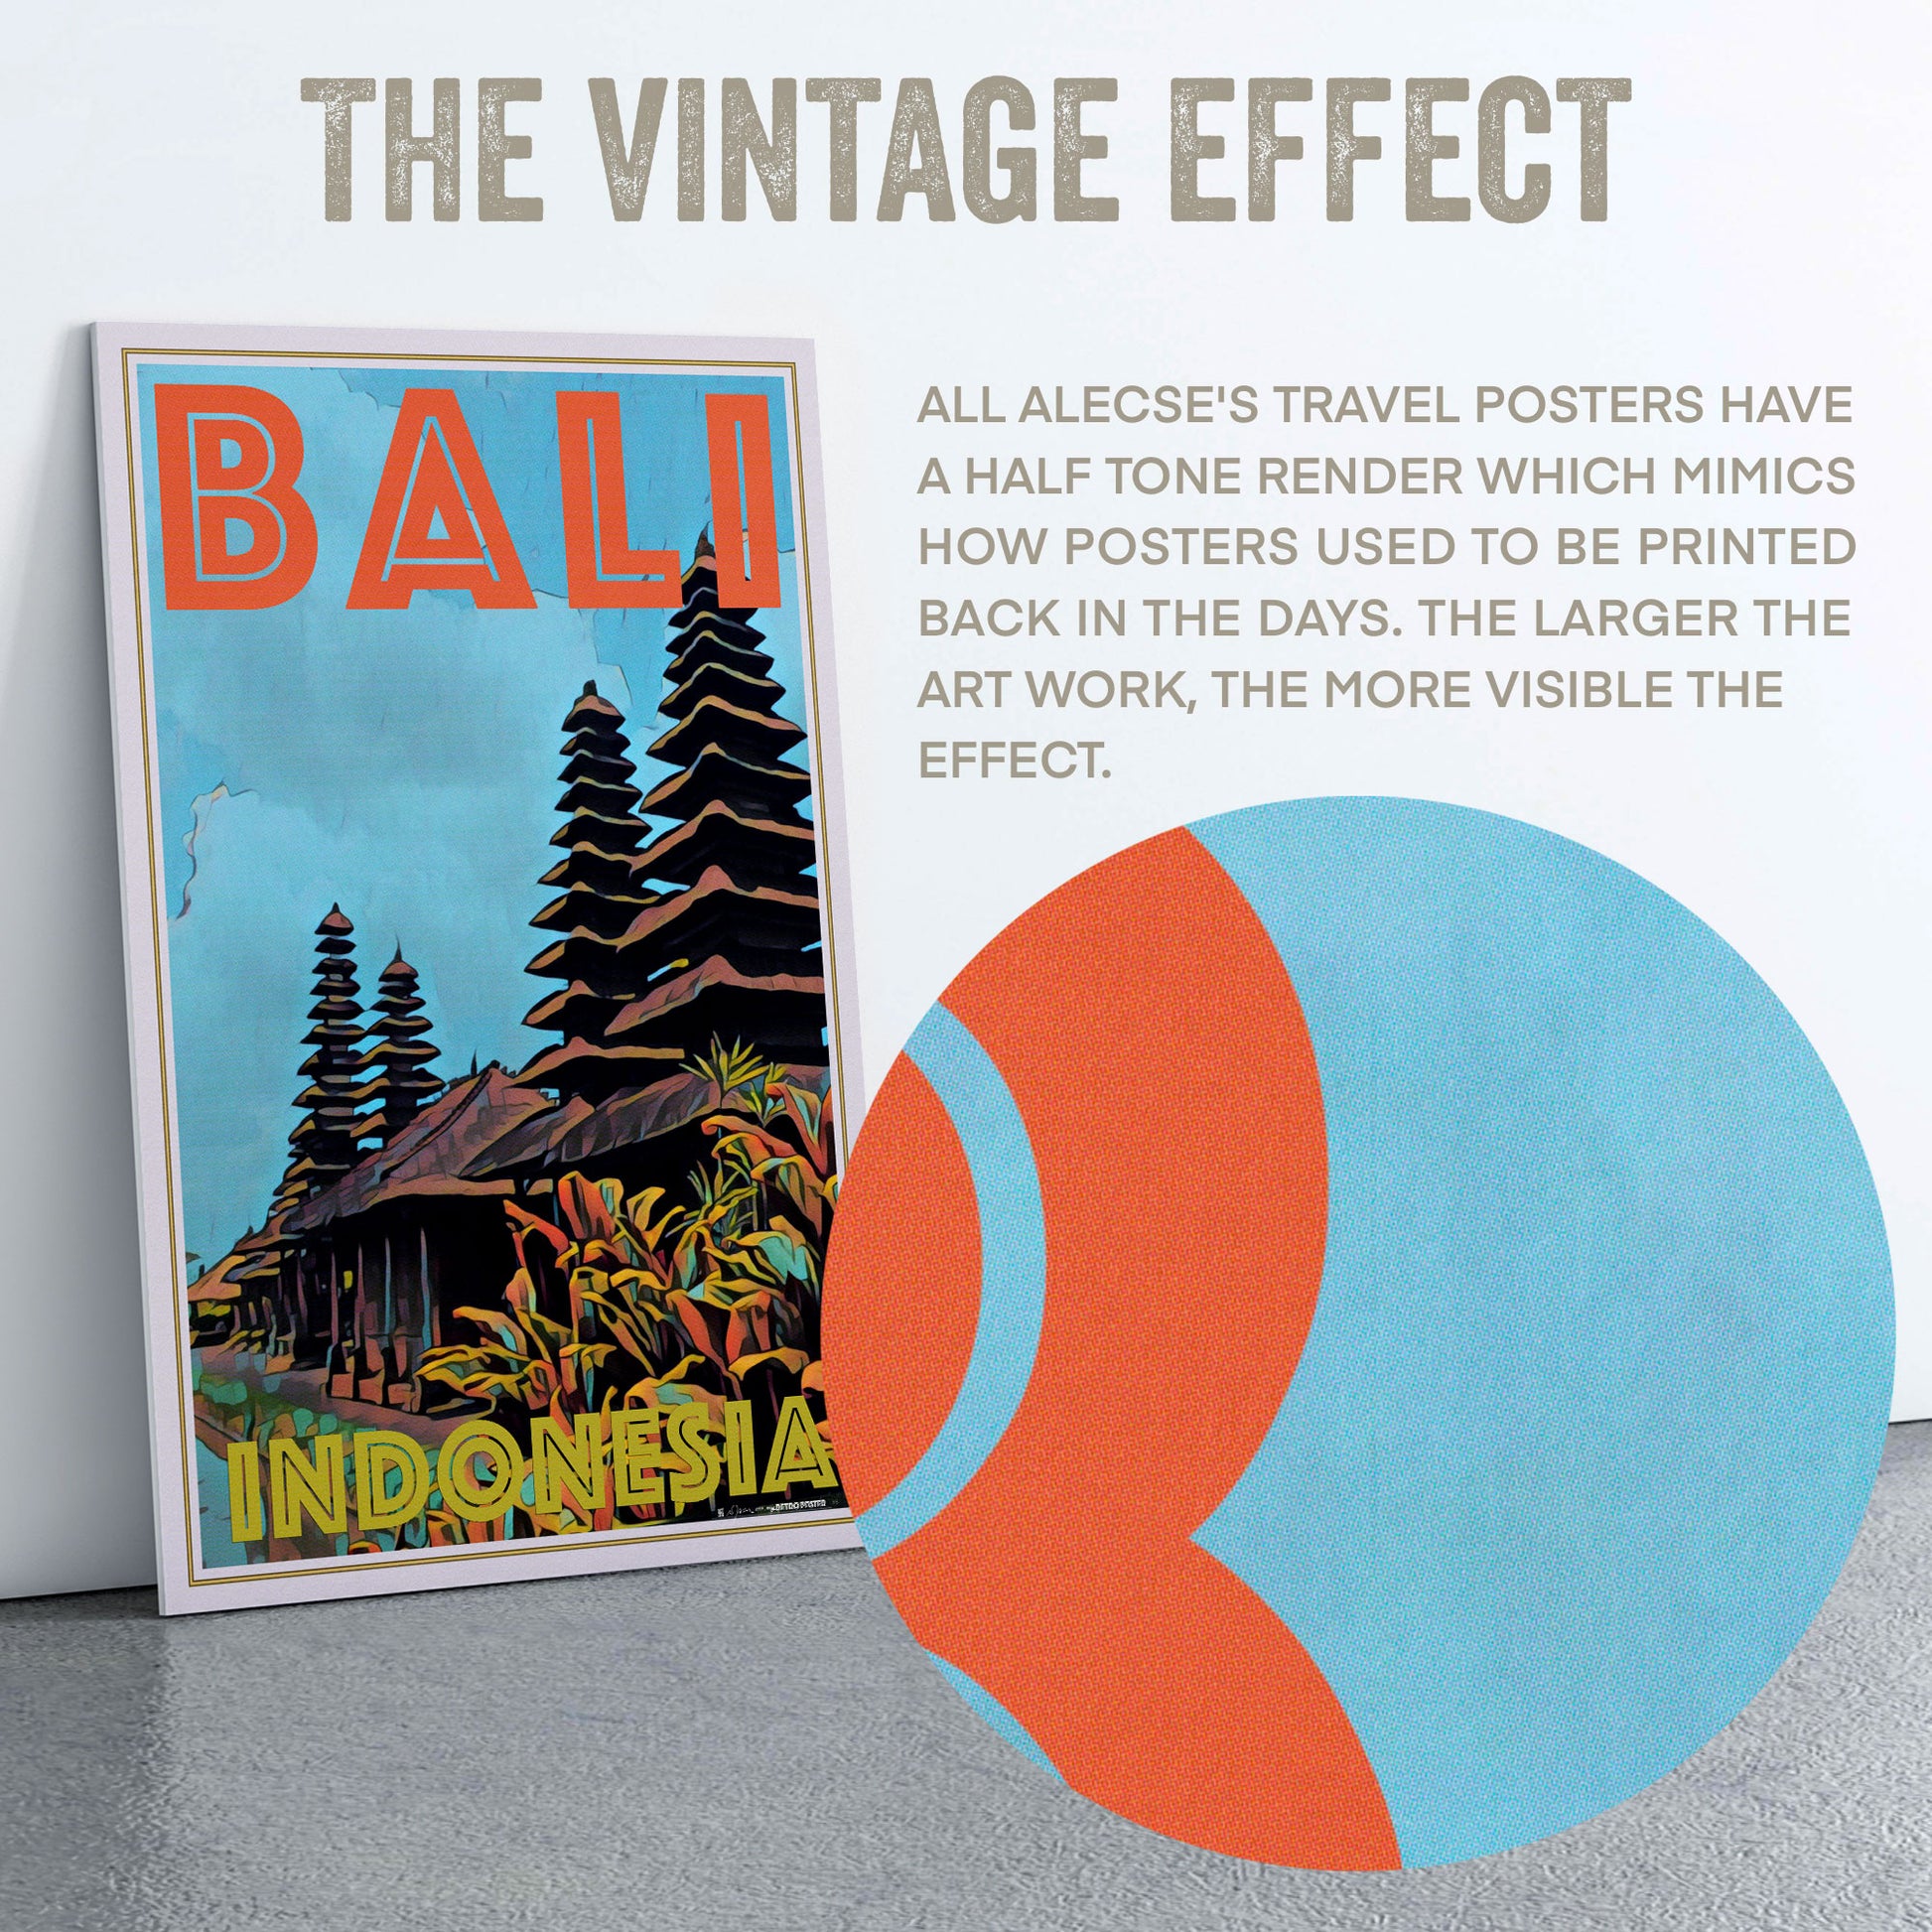 Macro detail of Alecse's half-tone render on Bali Travel Poster